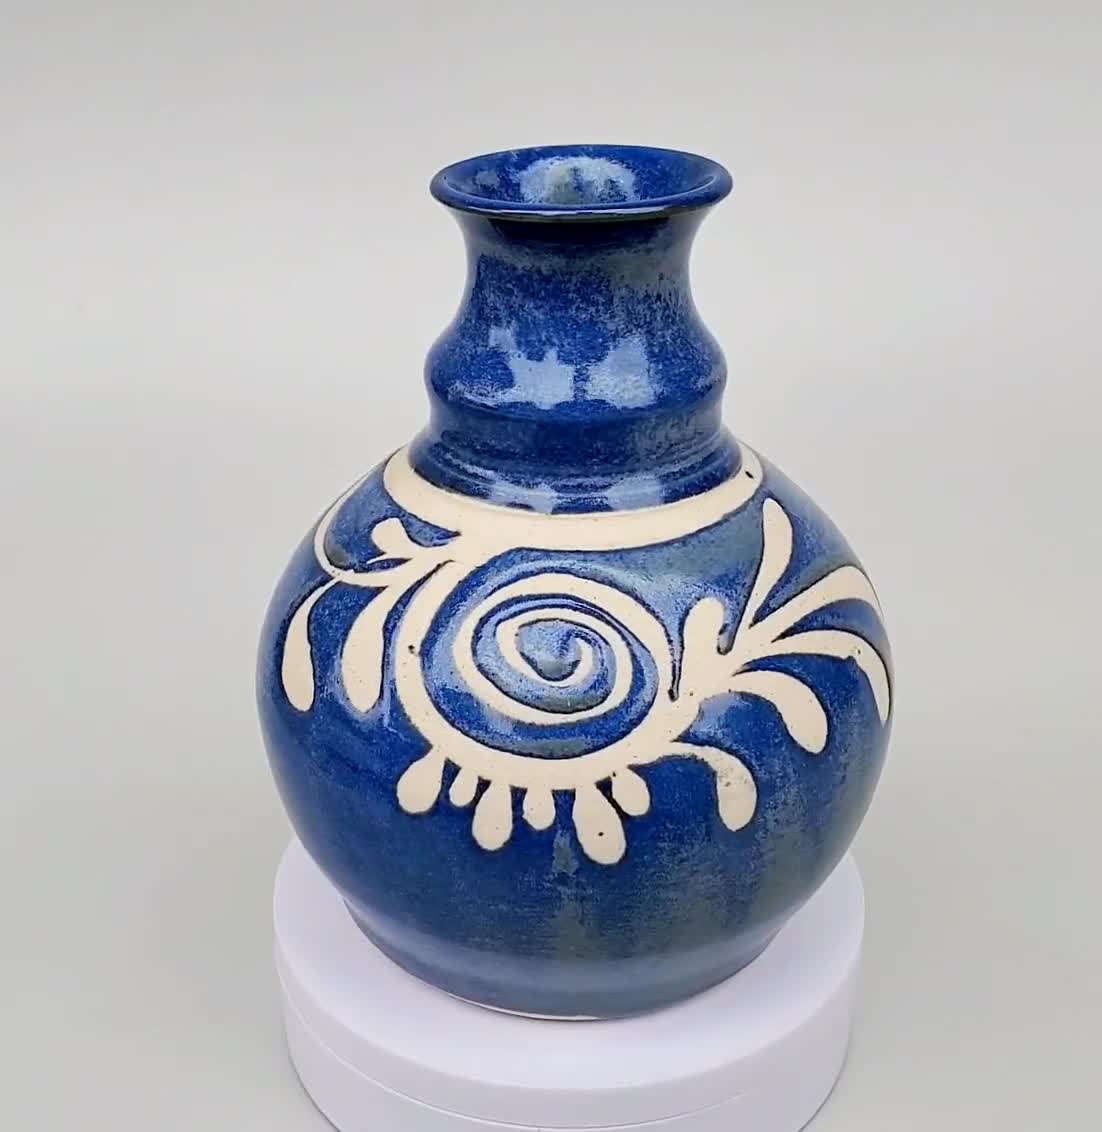 John Schulps California Studio Pottery Vase - Blue Glaze With Gray  Highlights - Fancy Wax Resist Design - MCM California Pottery - 6.5